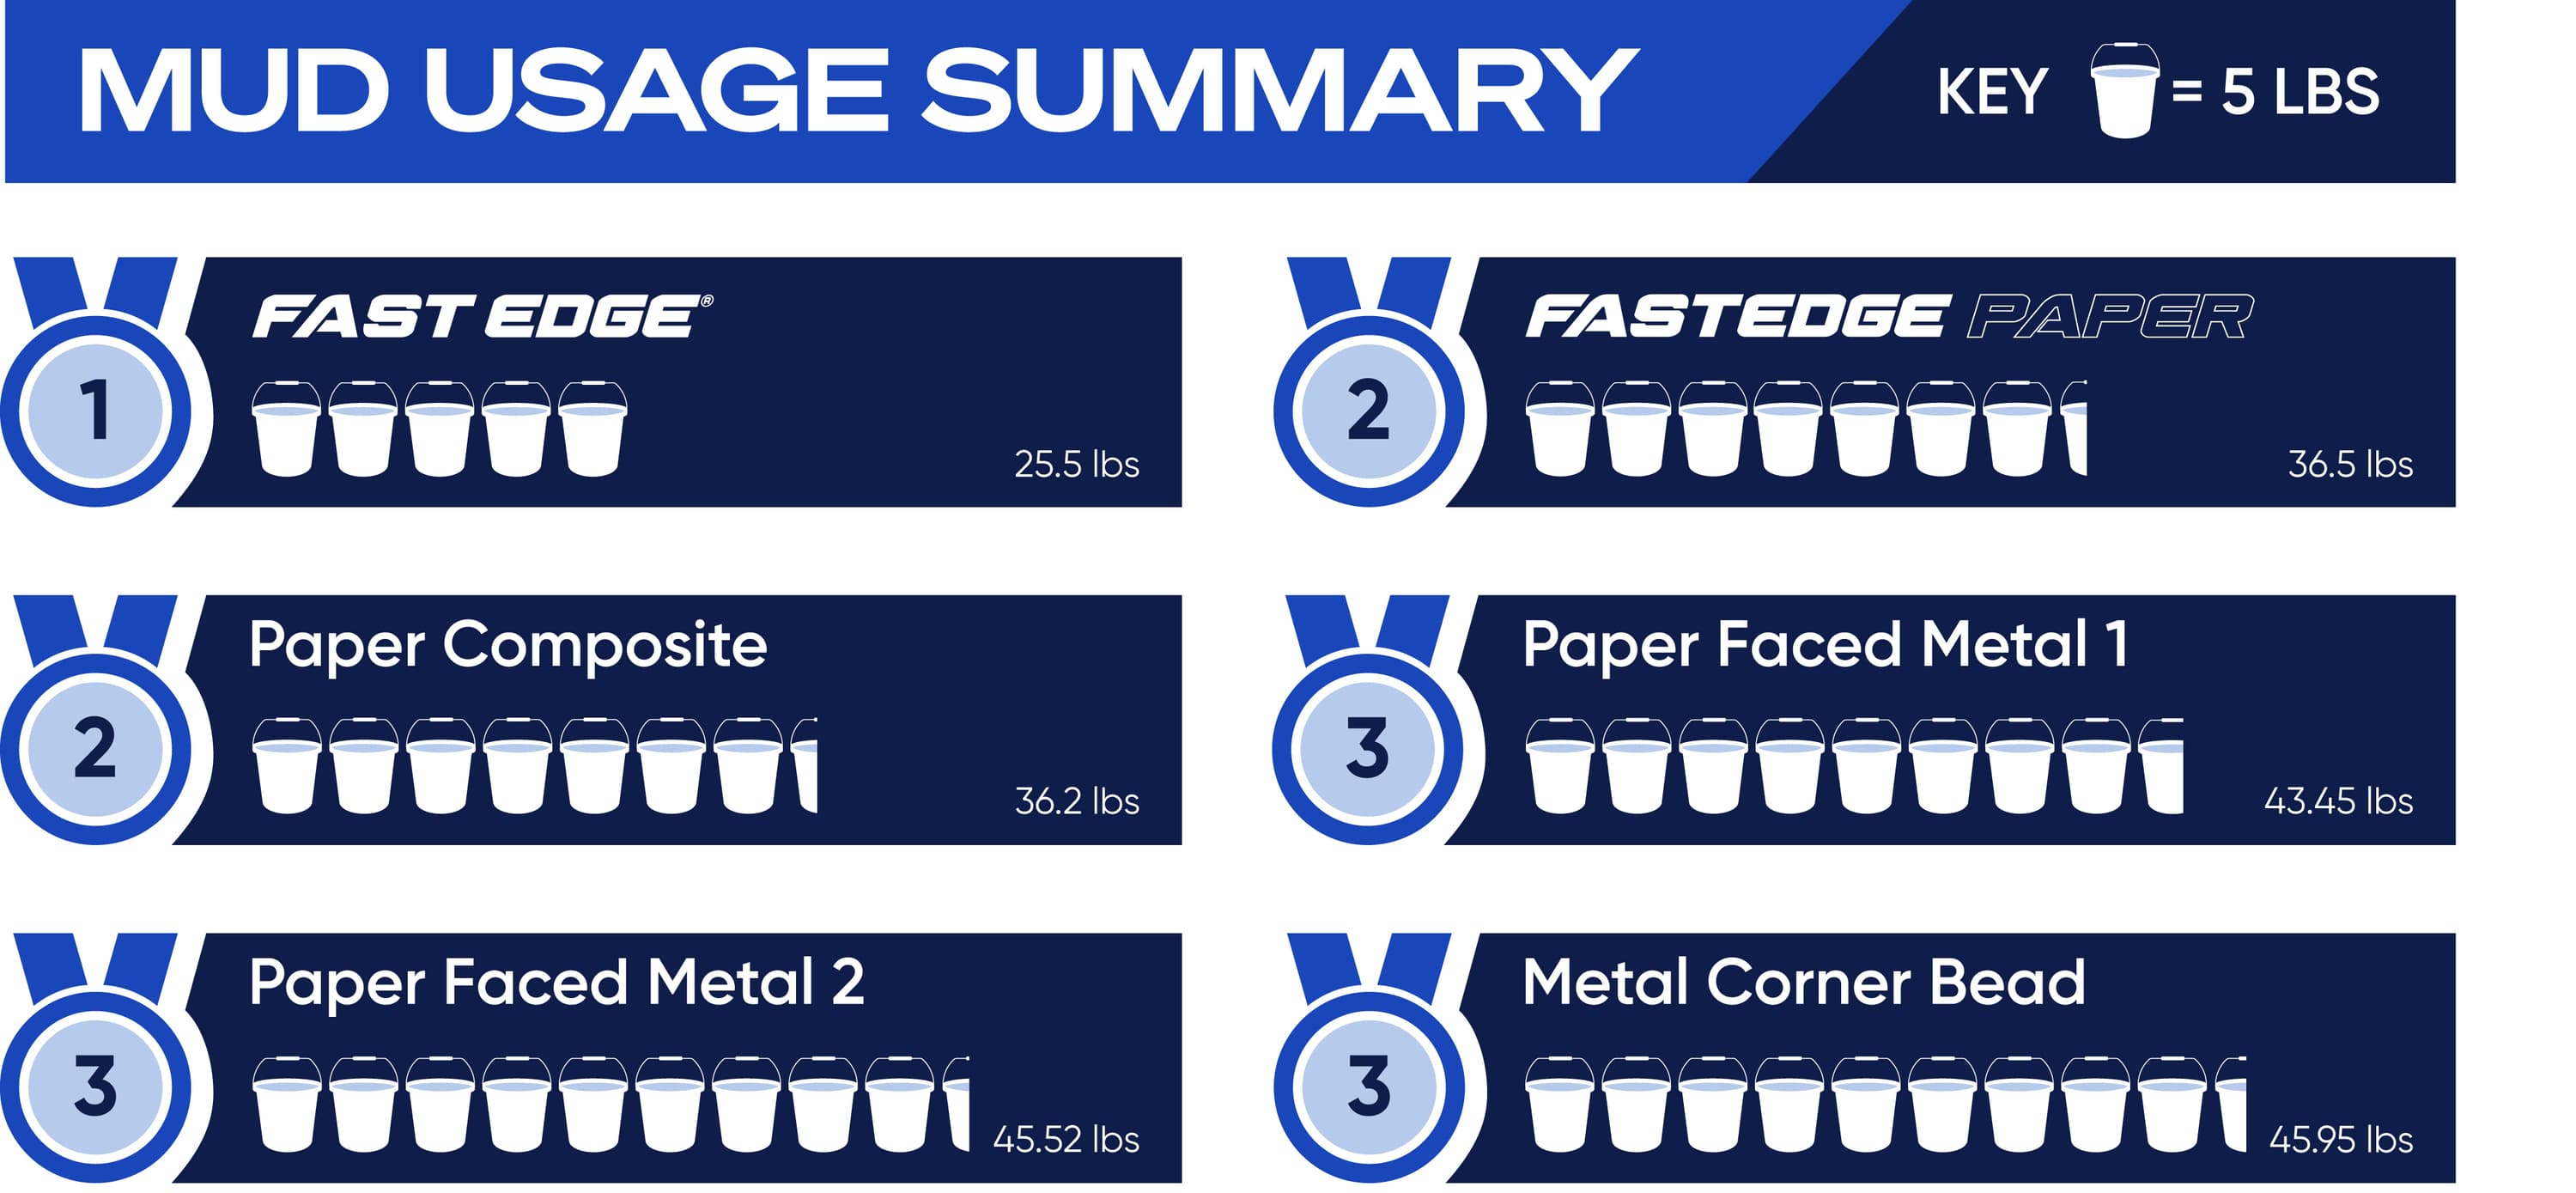 Fast Edge Mud Usage Update 1